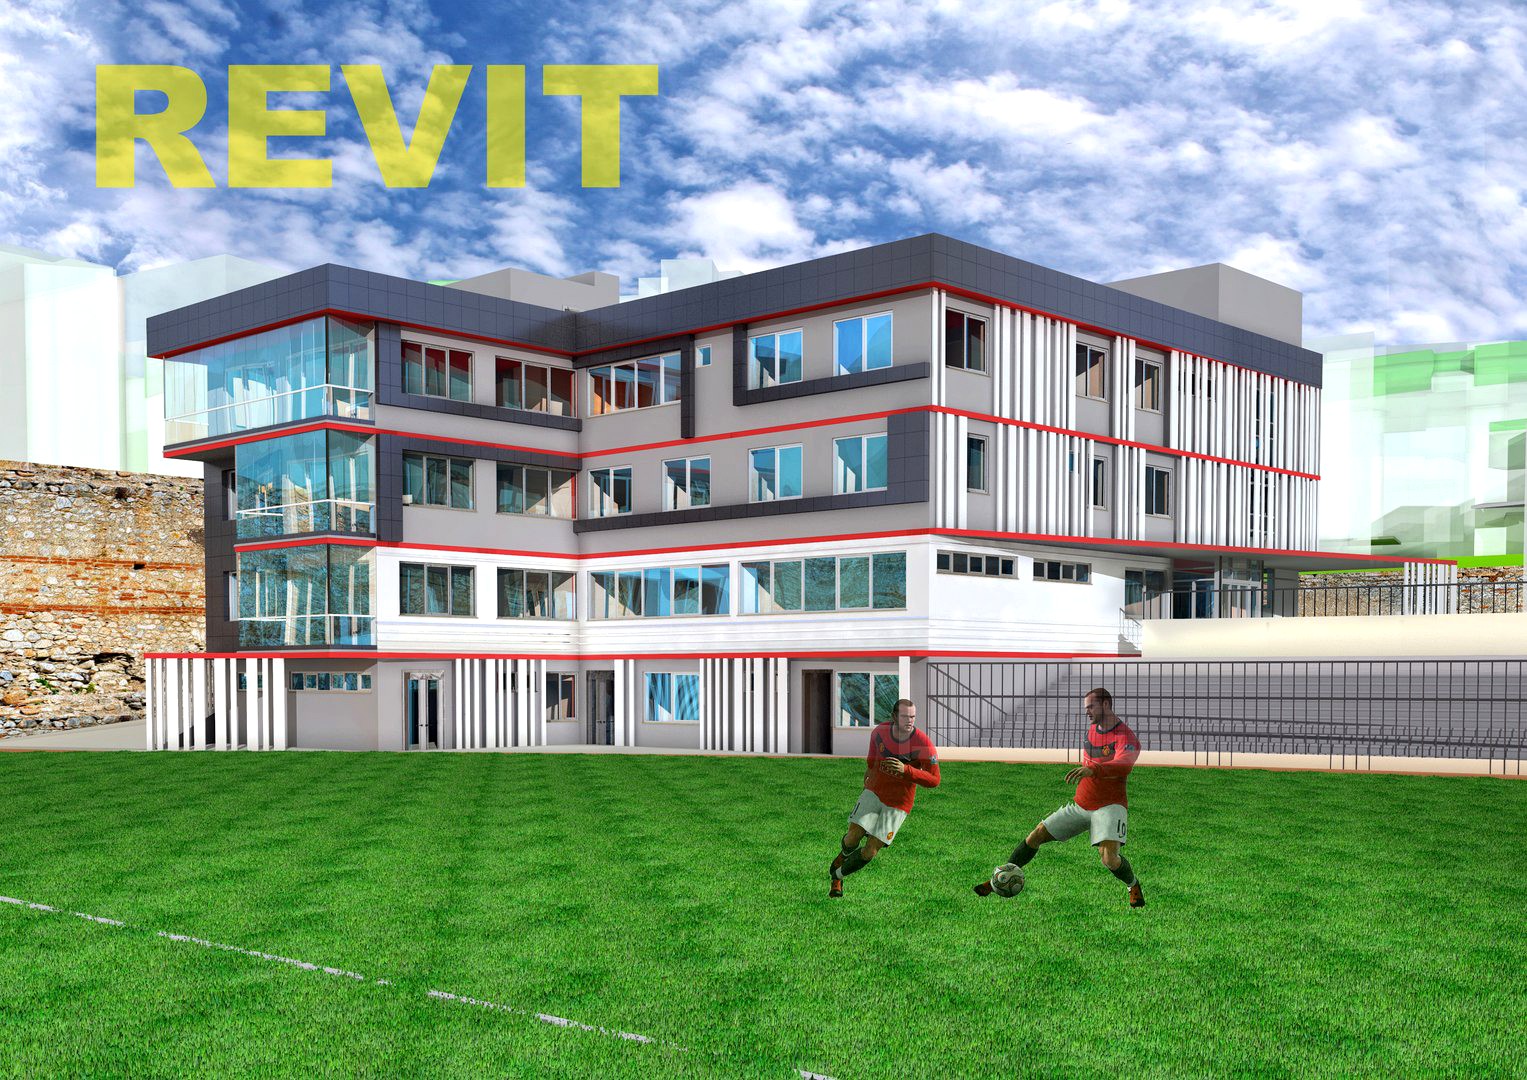 Football Administrative Building 3 REVIT